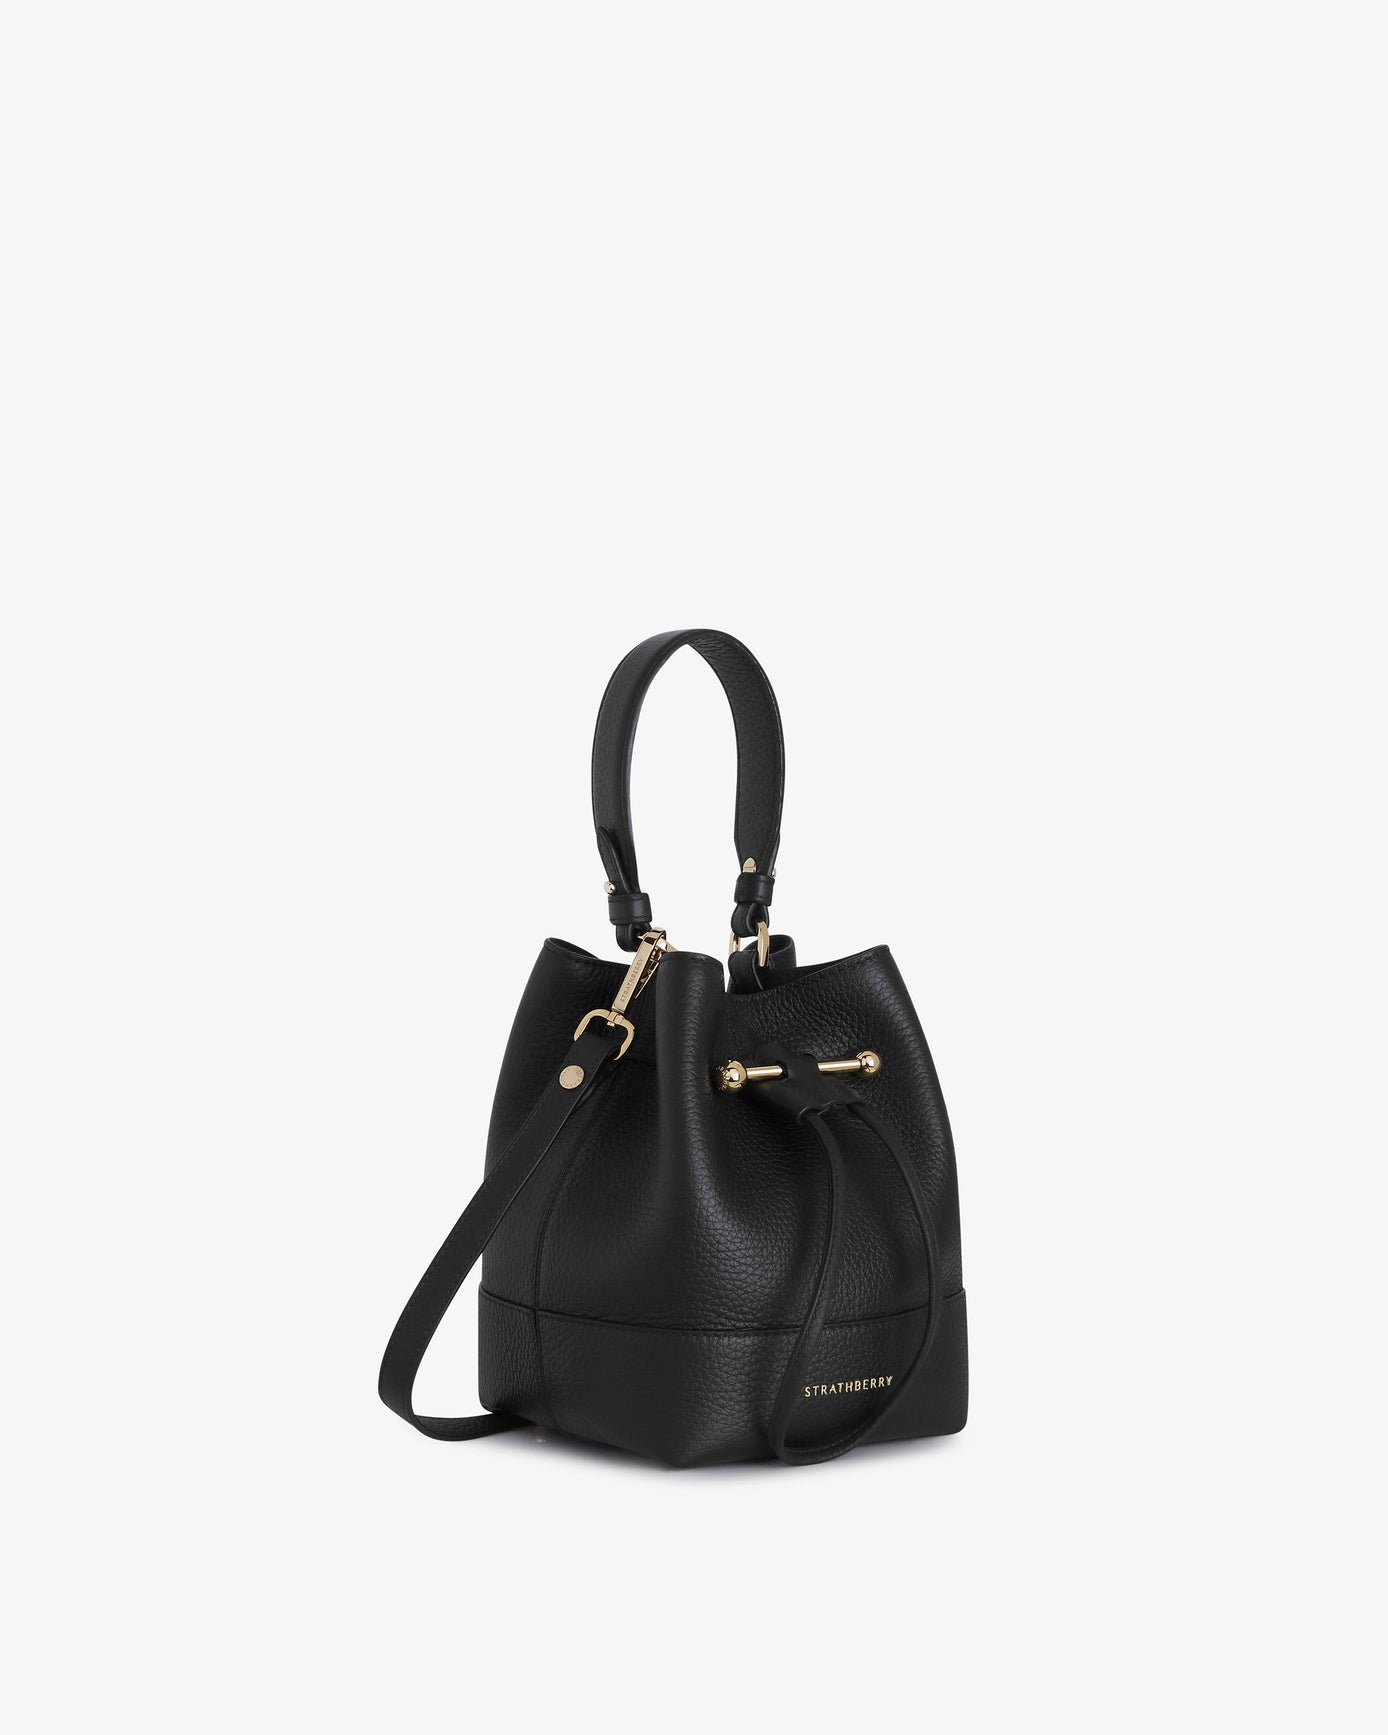 Strathberry - Lana Osette - Leather Mini Bucket Bag - Black